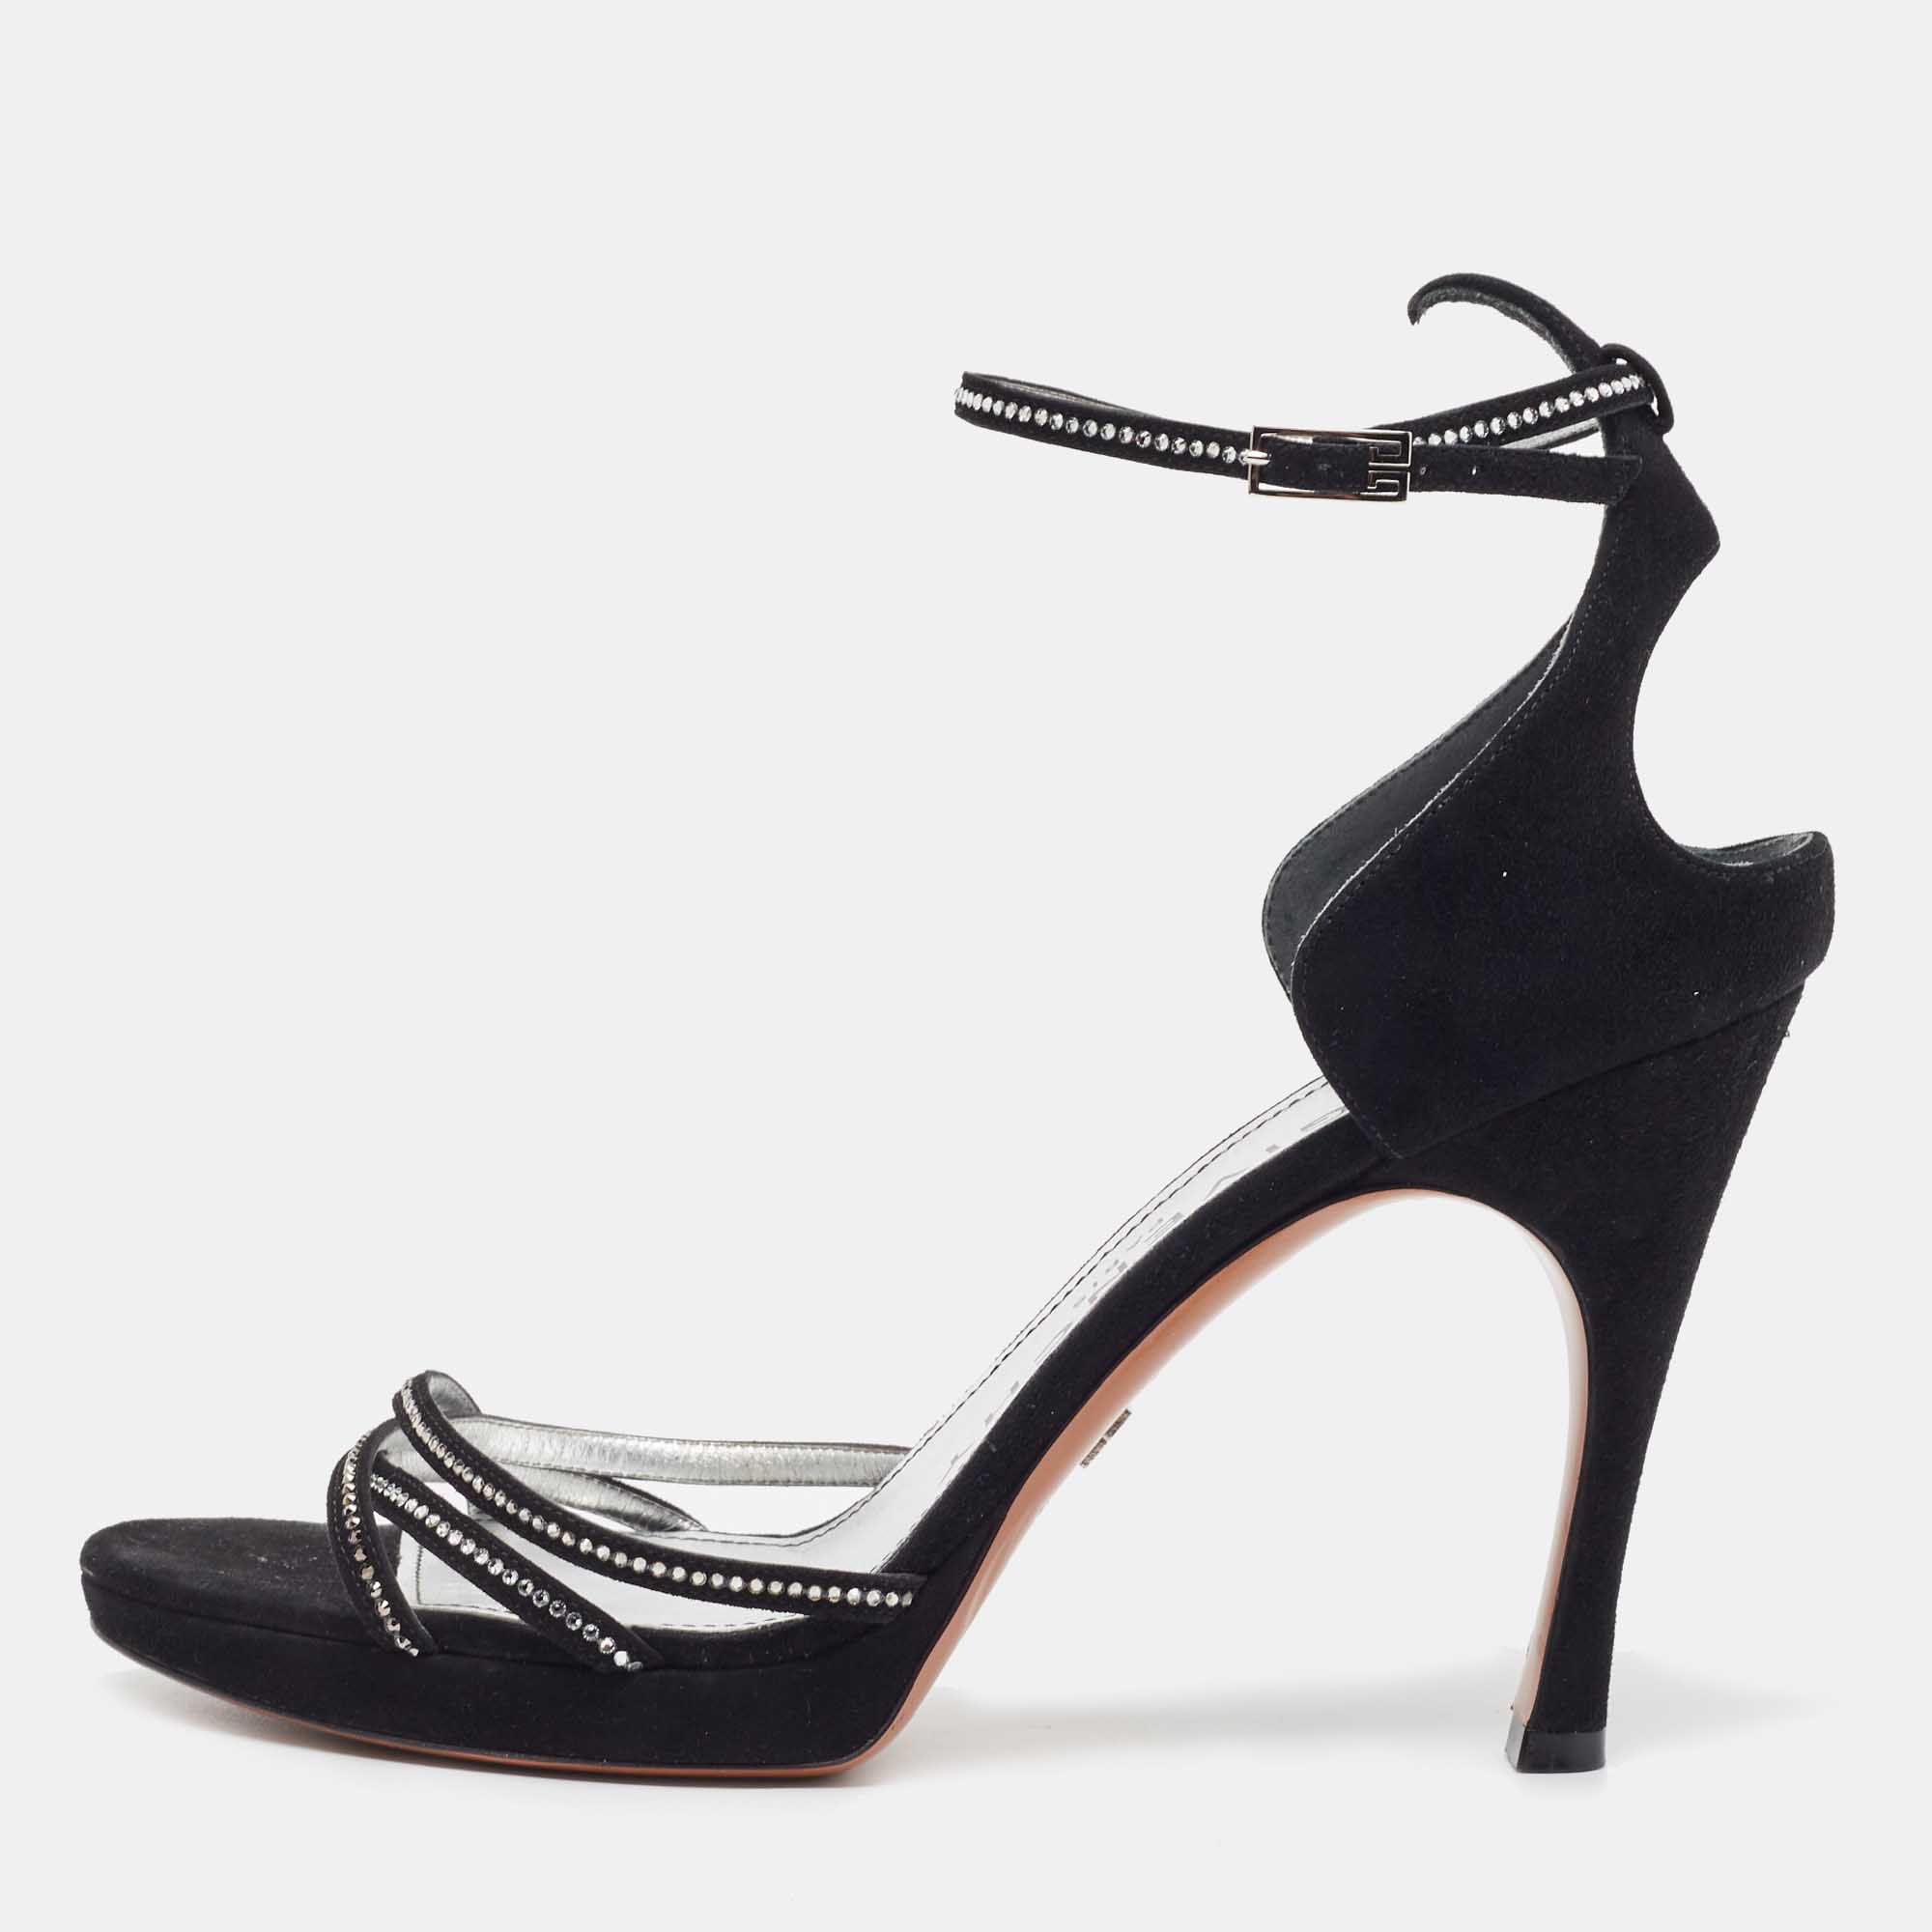 Givenchy black suede crystal embellished strappy sandals size 40